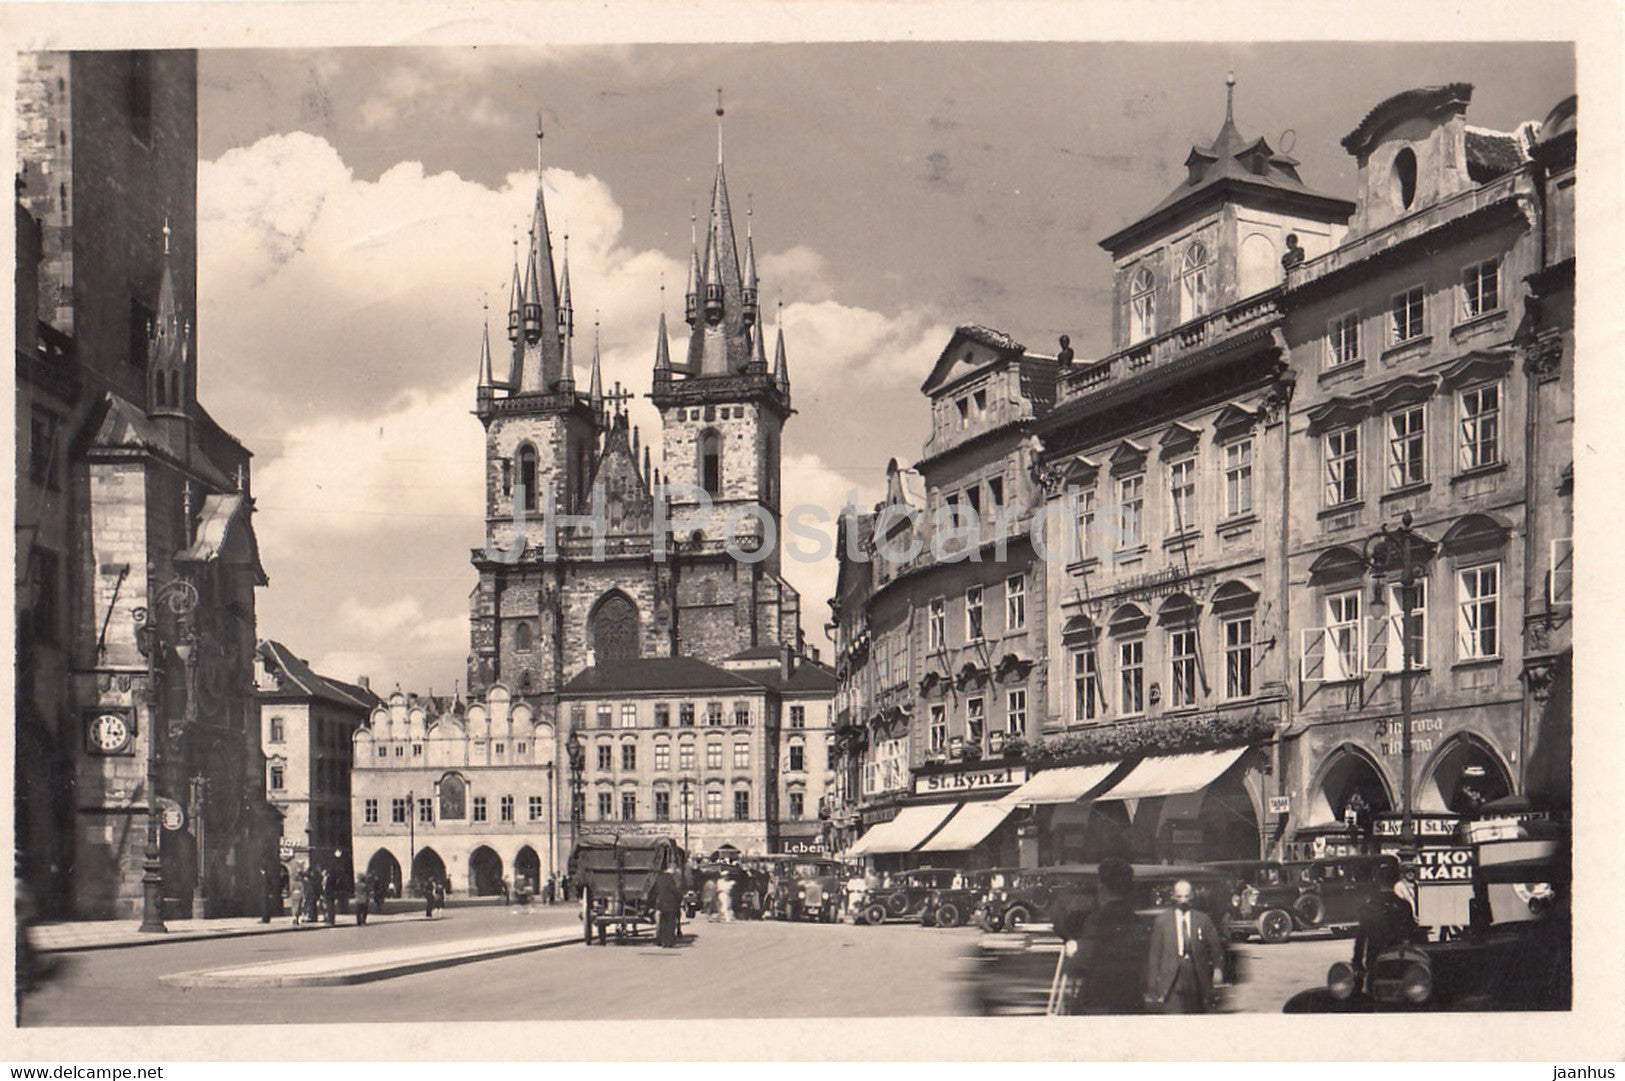 Praha - Prague - Staromestske namesti a Tynsky Chram - old postcard -  1932 - Czechoslovakia - Czech Republic - used - JH Postcards